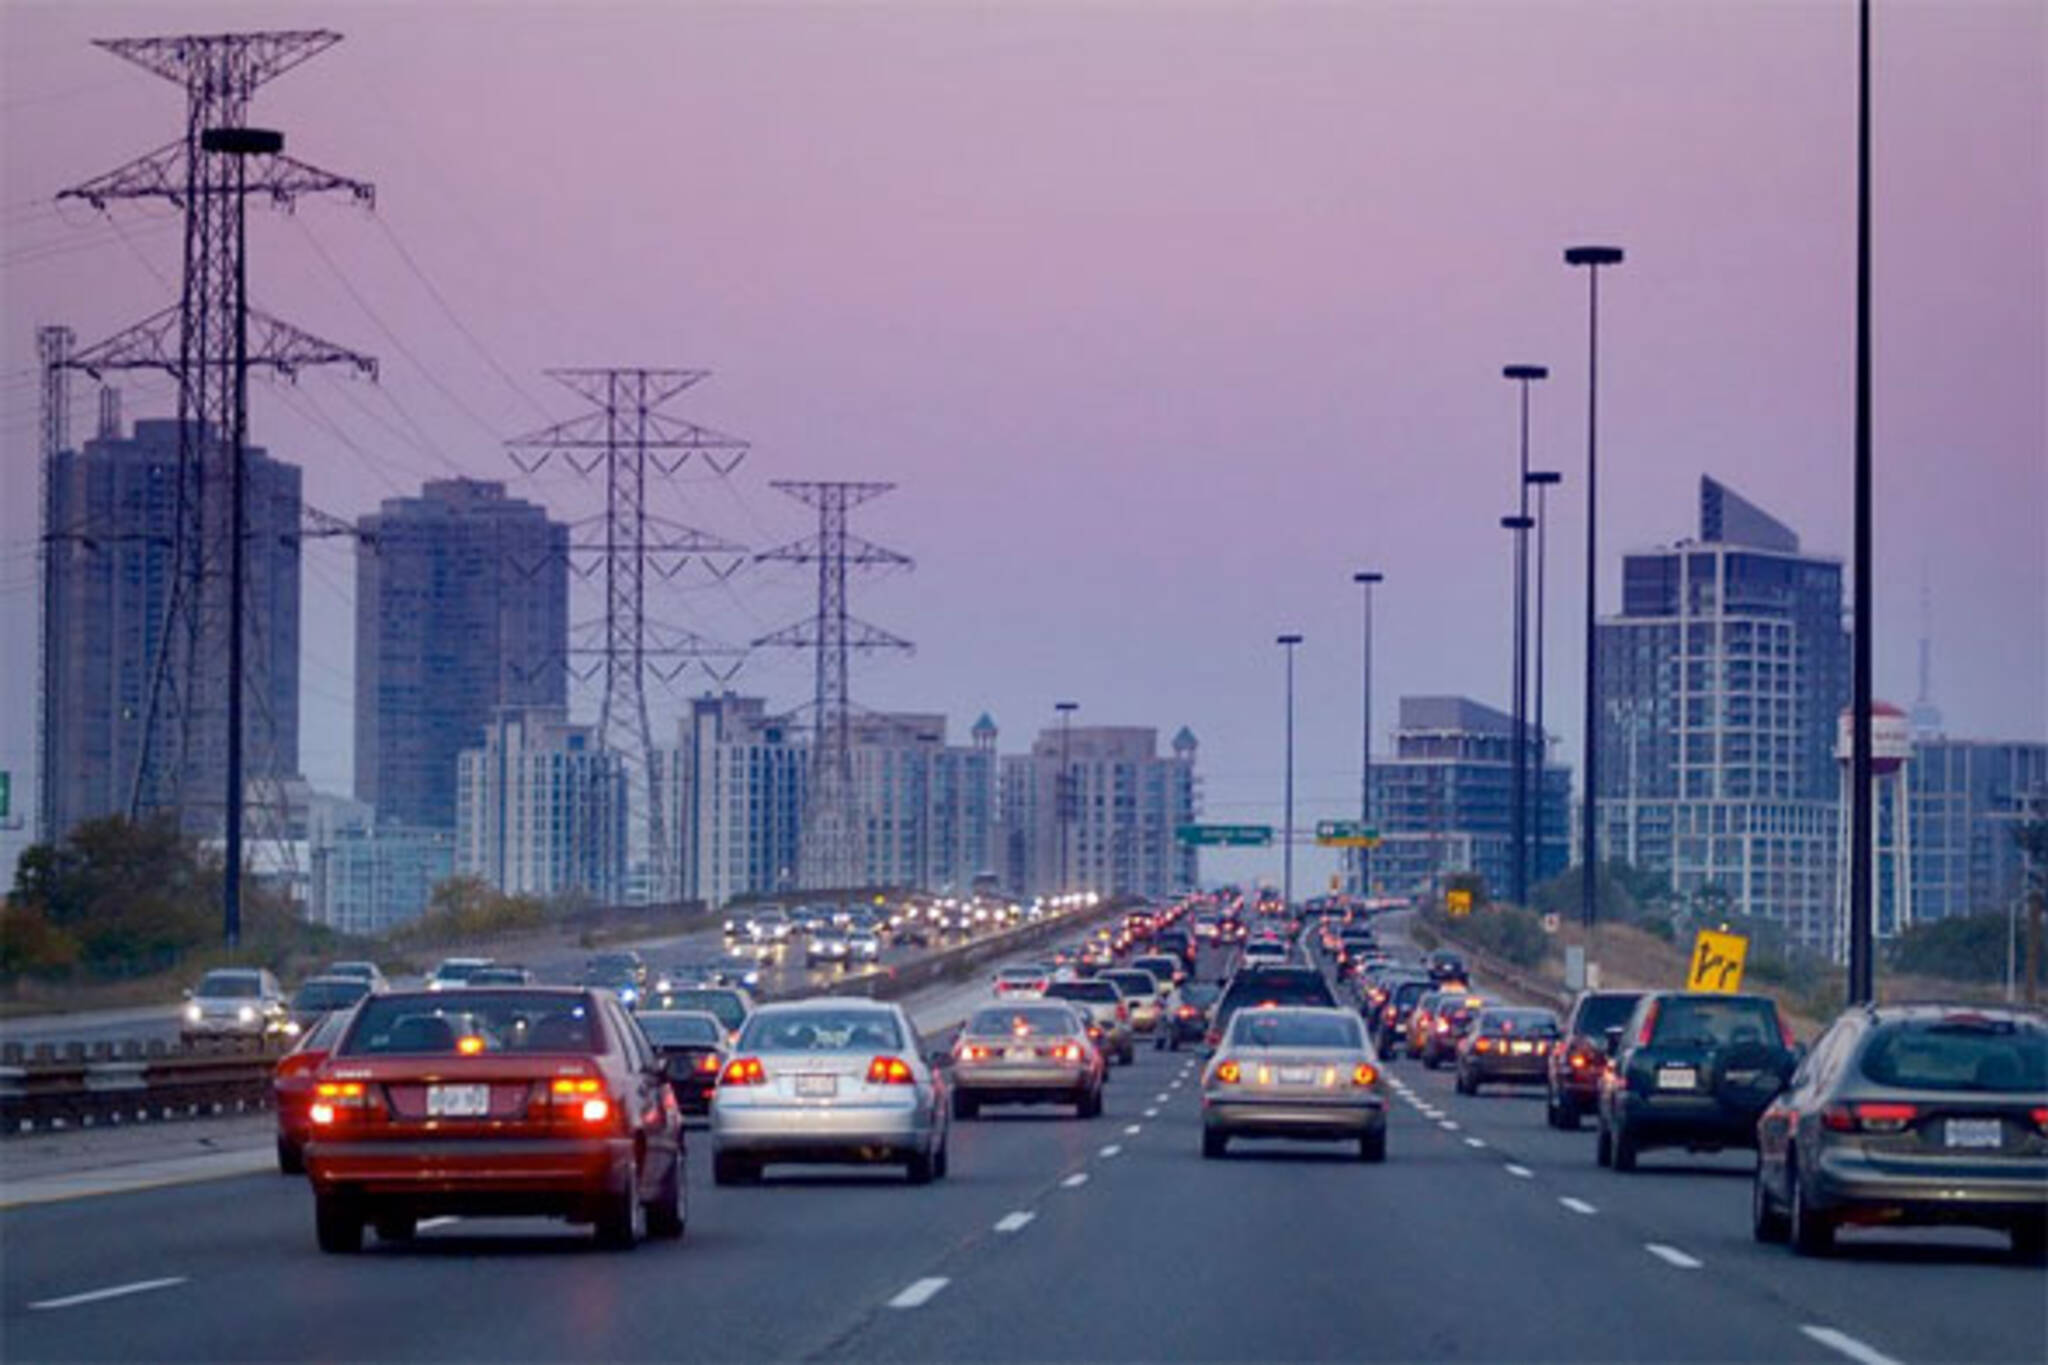 Toronto Traffic